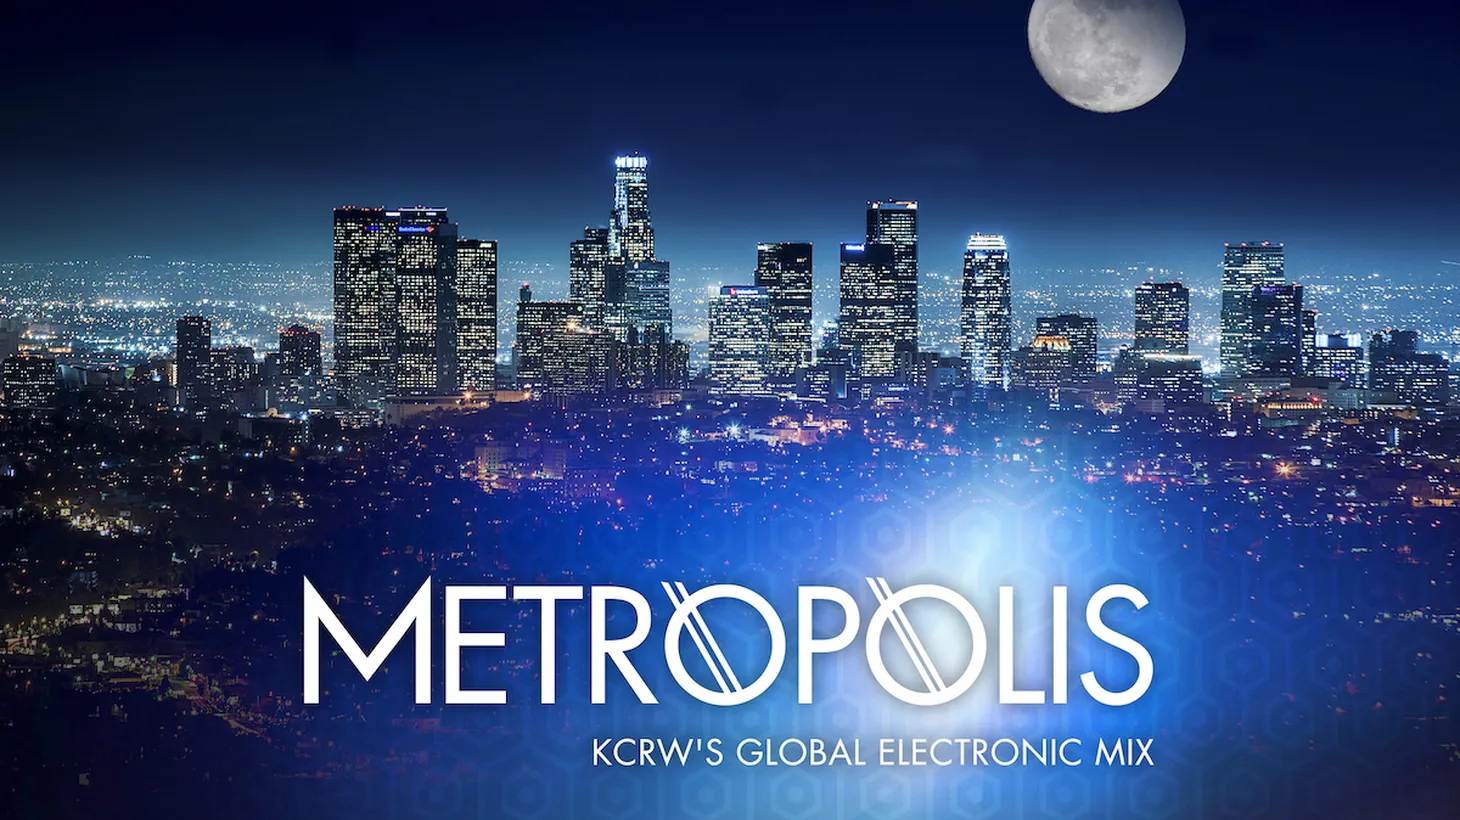 Metropolis playlist, December 11, 2021.